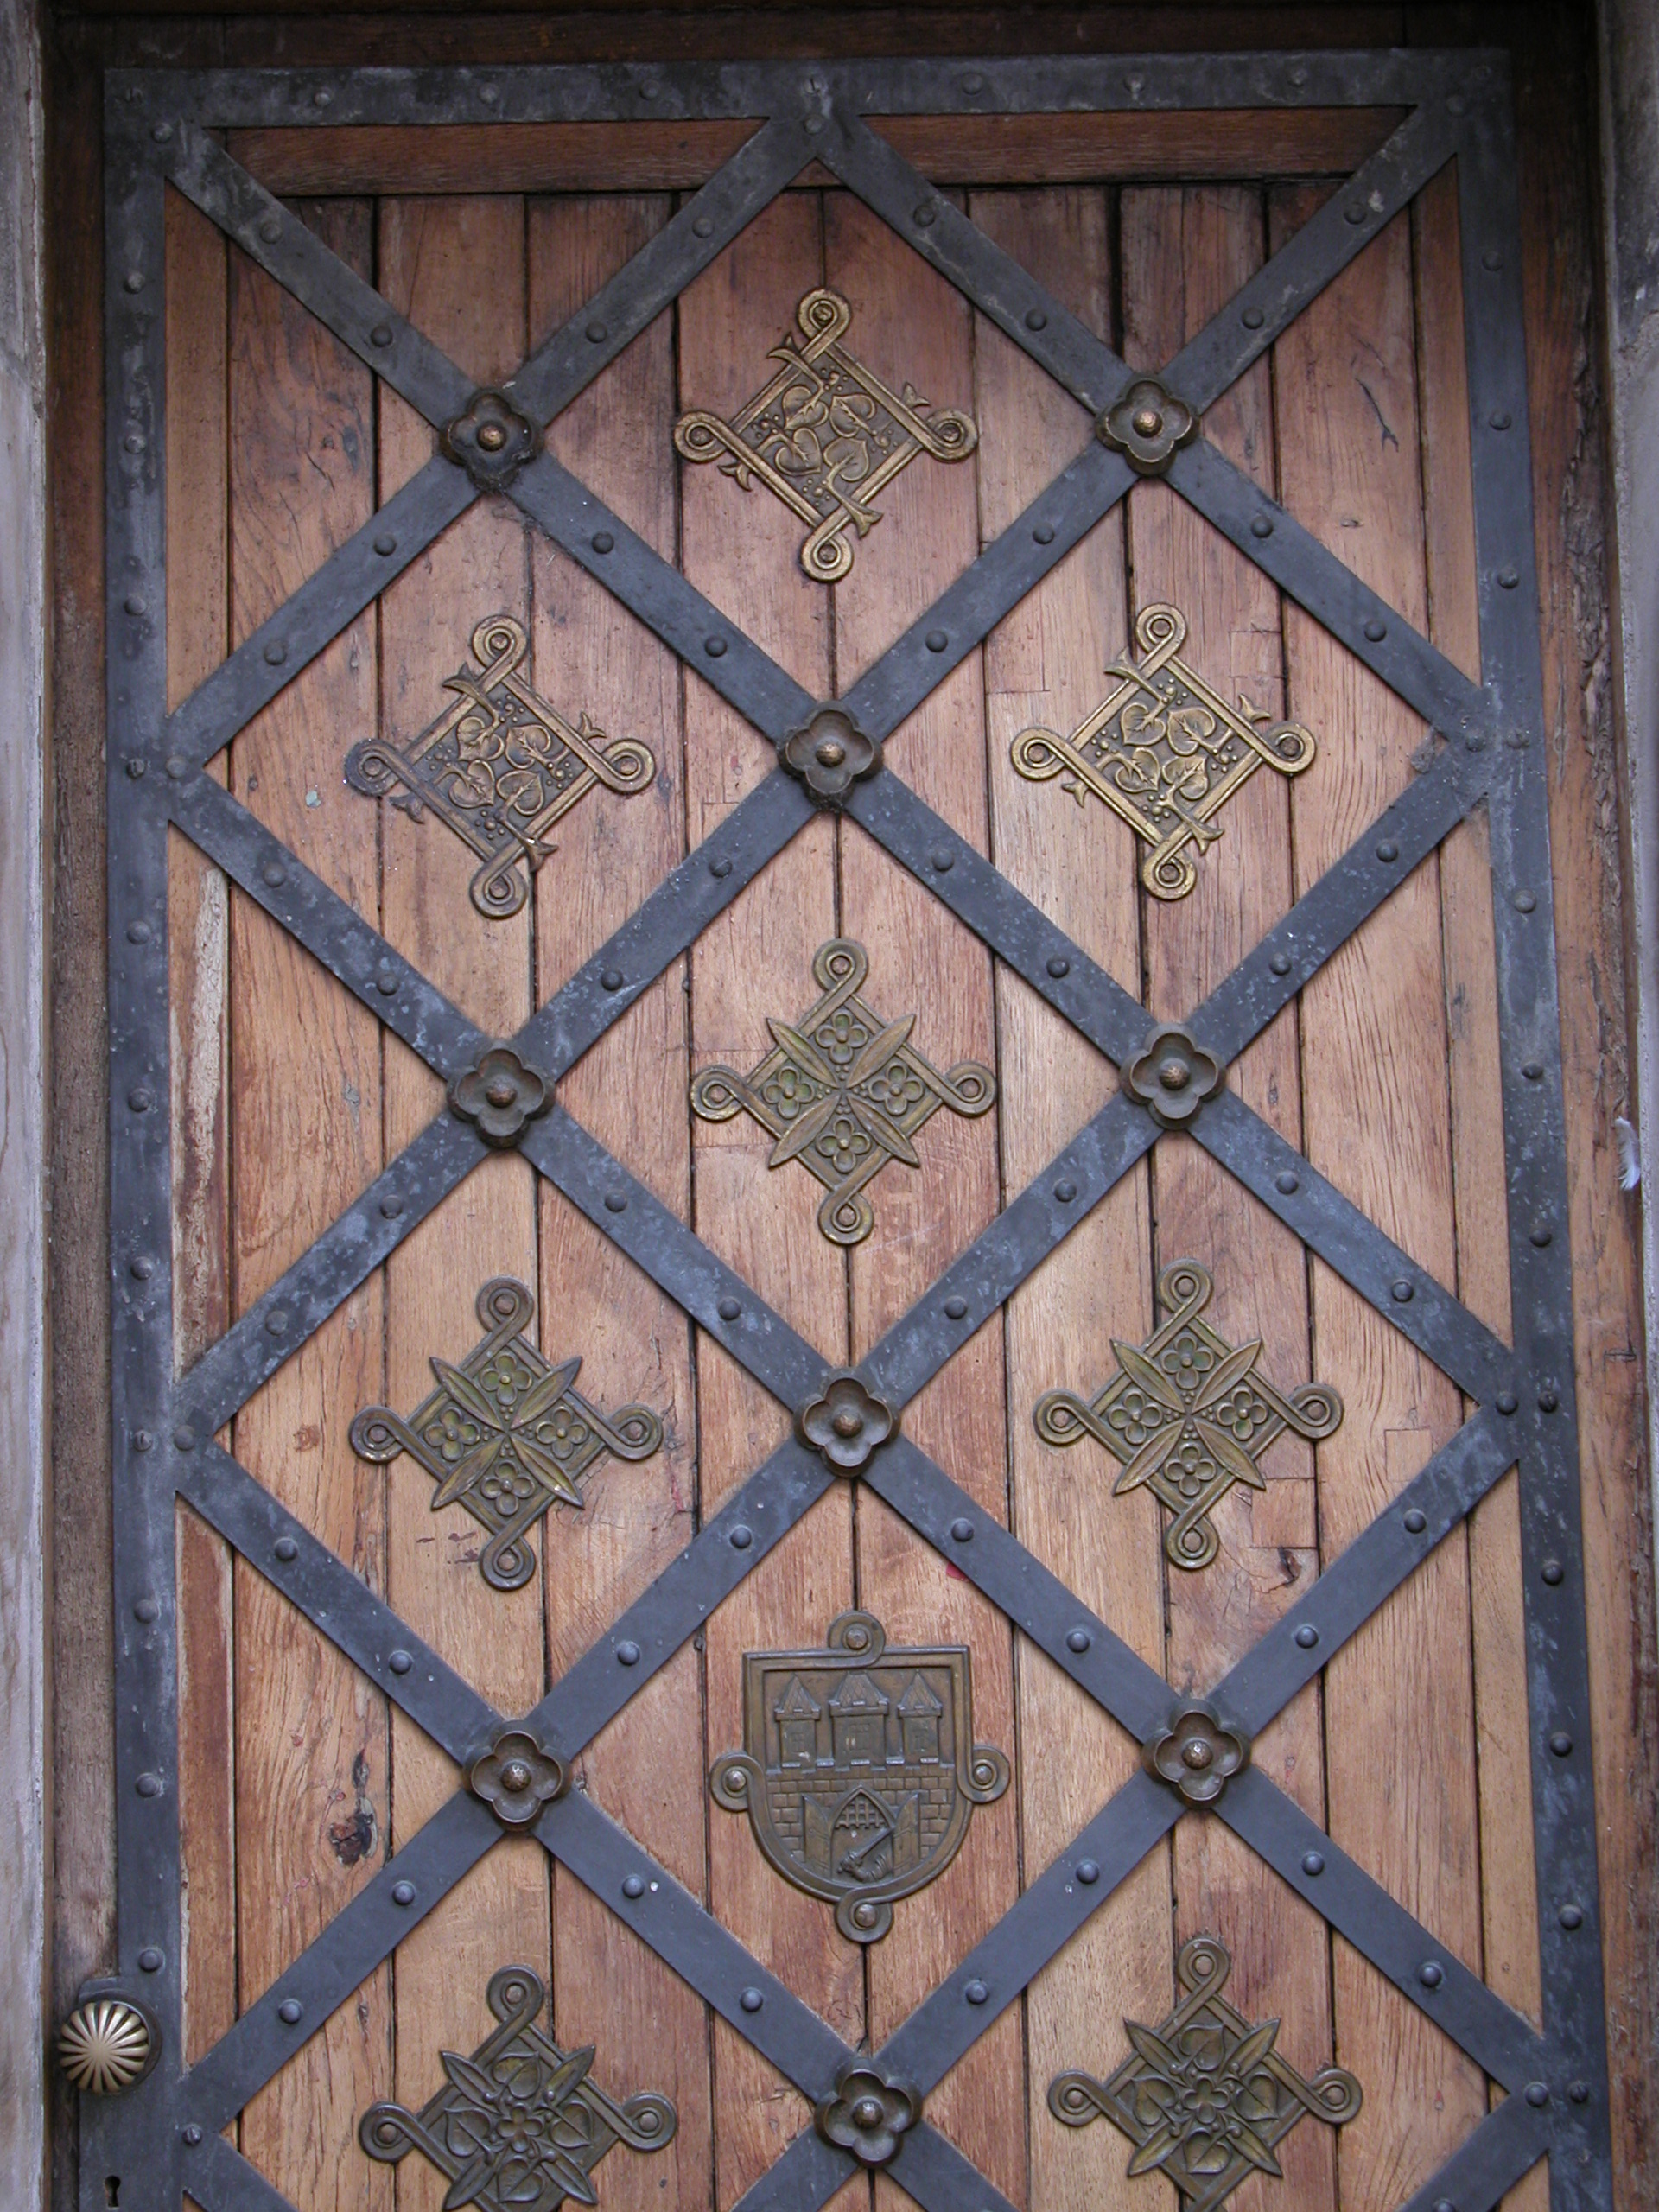 woods door ornaments copper metal iron texture mediavel mediaval clover diamond ornamented